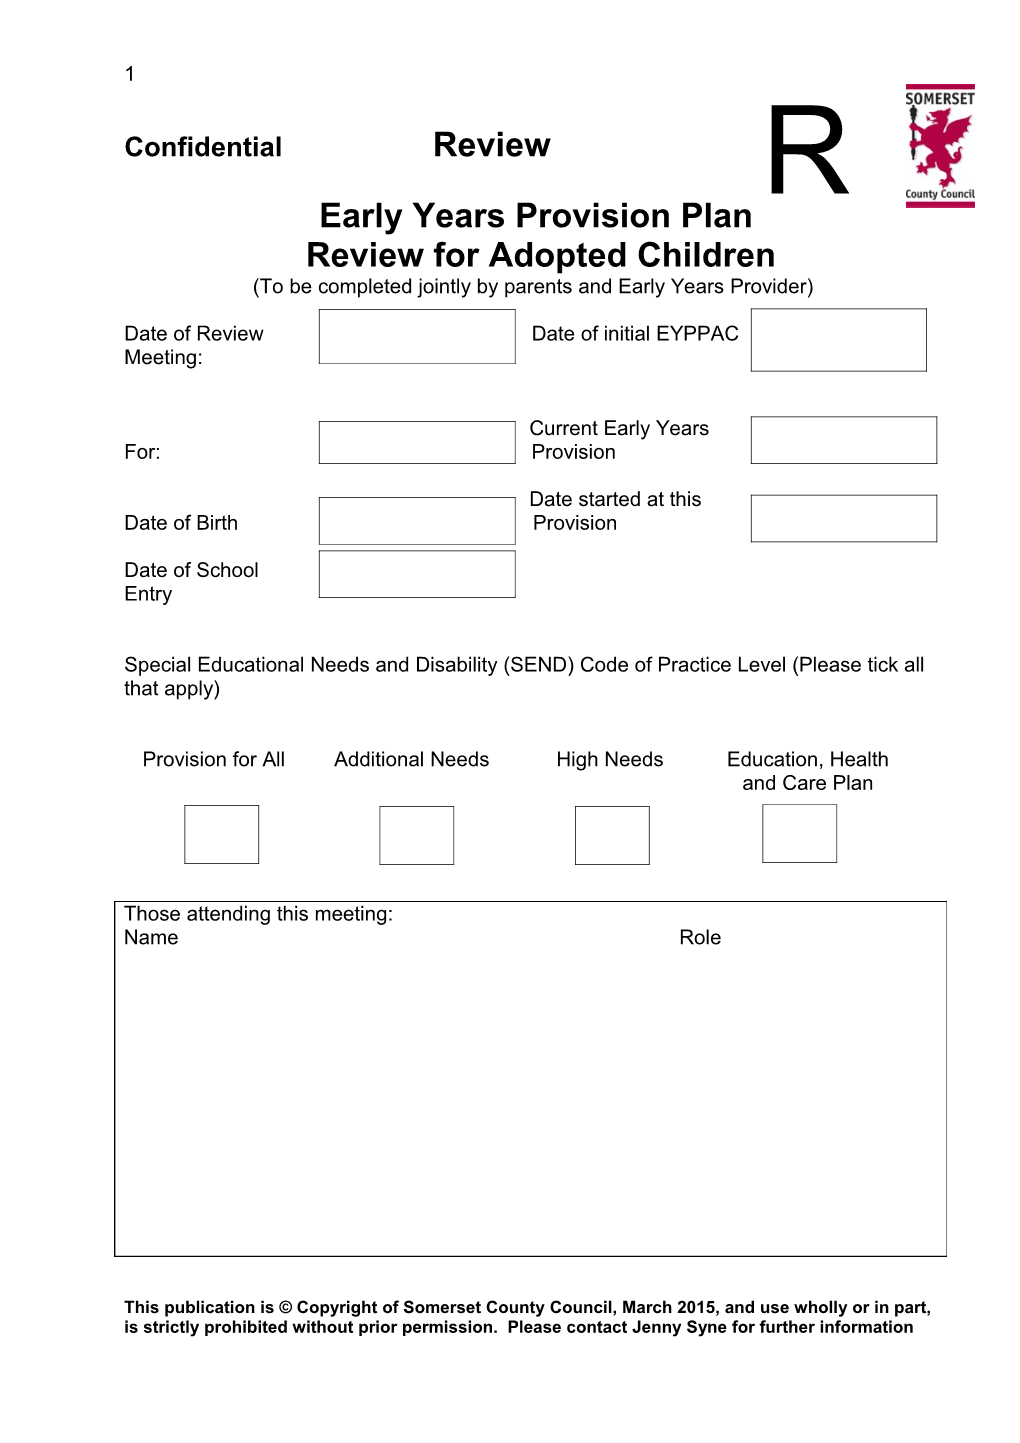 Adoptive Education Plan Review